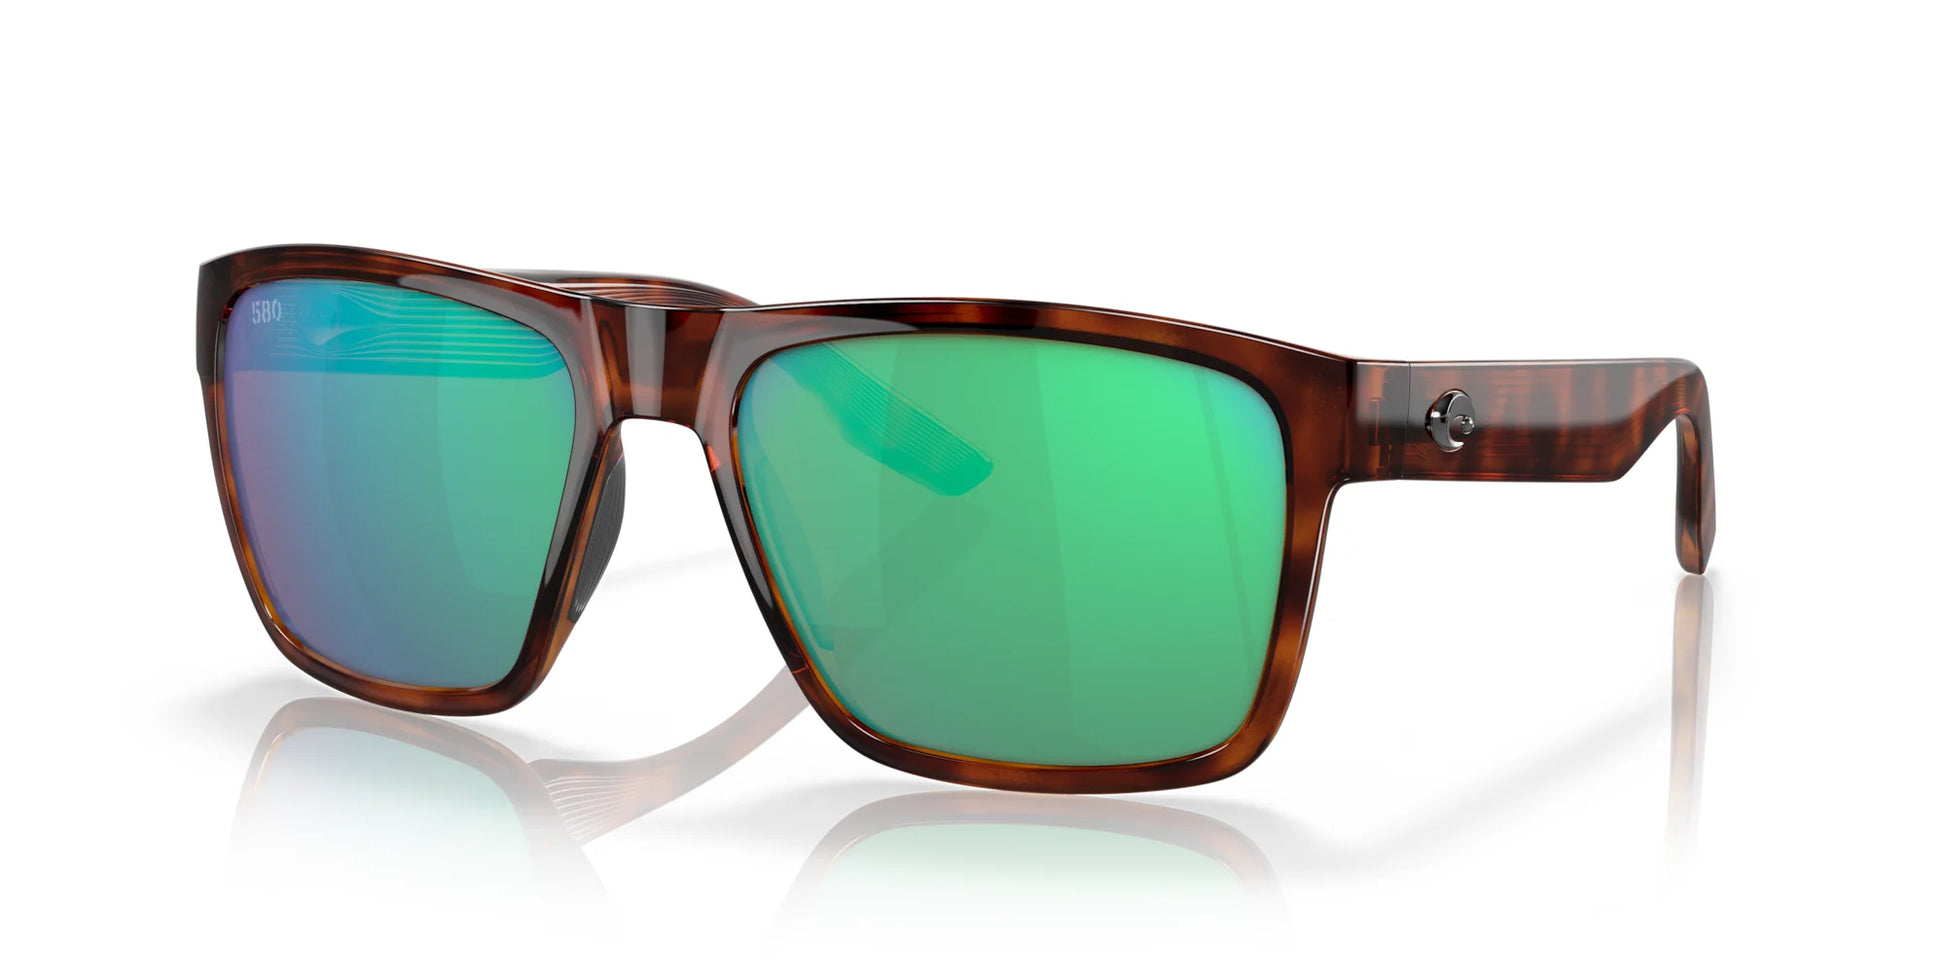 Costa PAUNCH XL 6S9050 Sunglasses Tortoise / Green Mirror